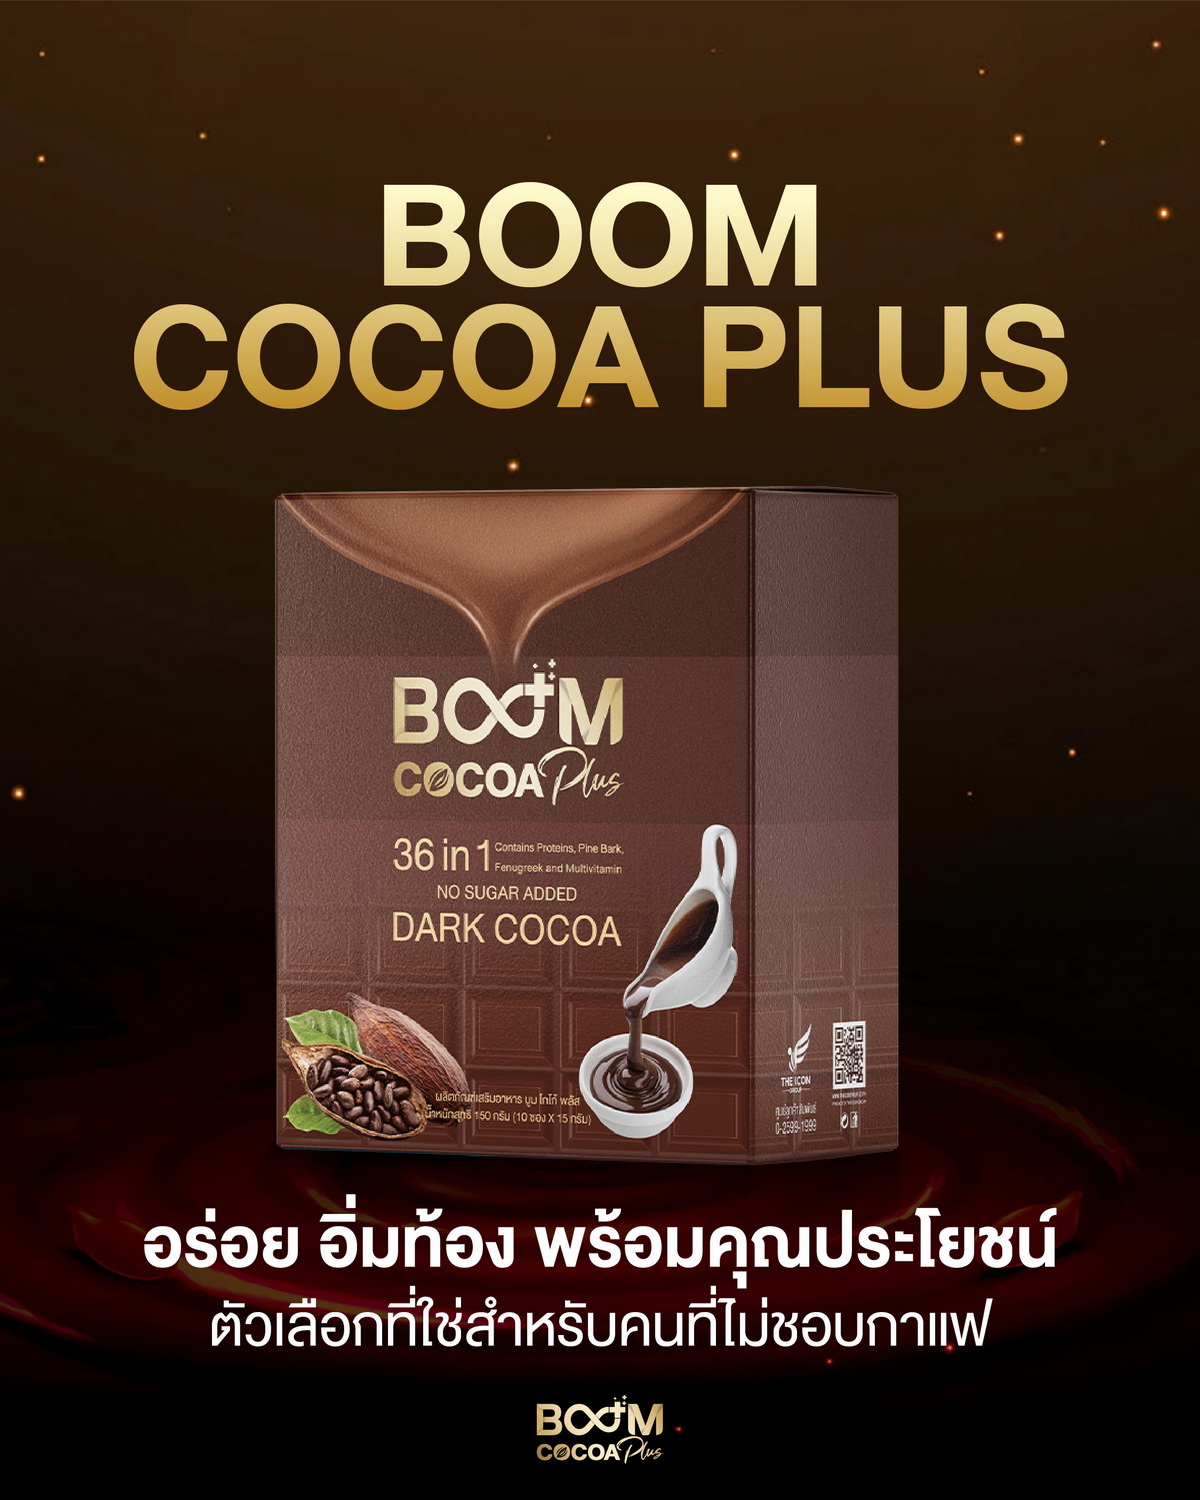 Boom Cocoa Plus ตัวเลือกที่ใช่สำหรับคนไม่ดื่มกาแฟ